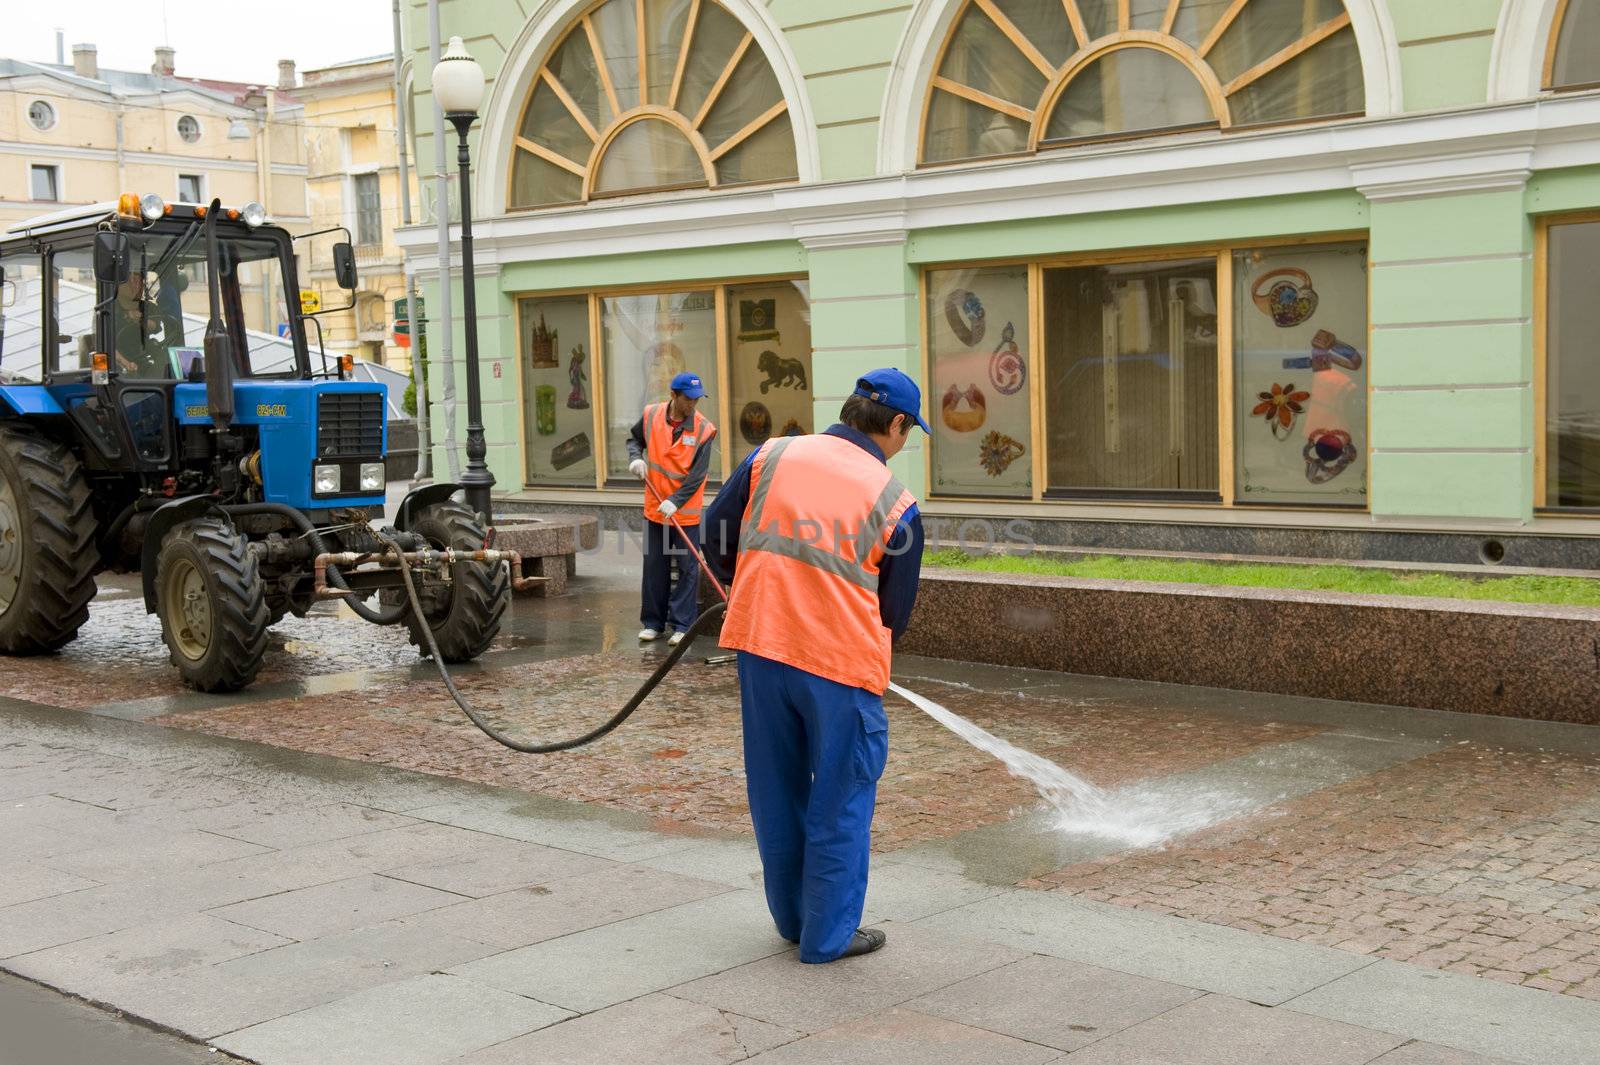 Street cleaner in St Petersburg, Russia taken on June 2011